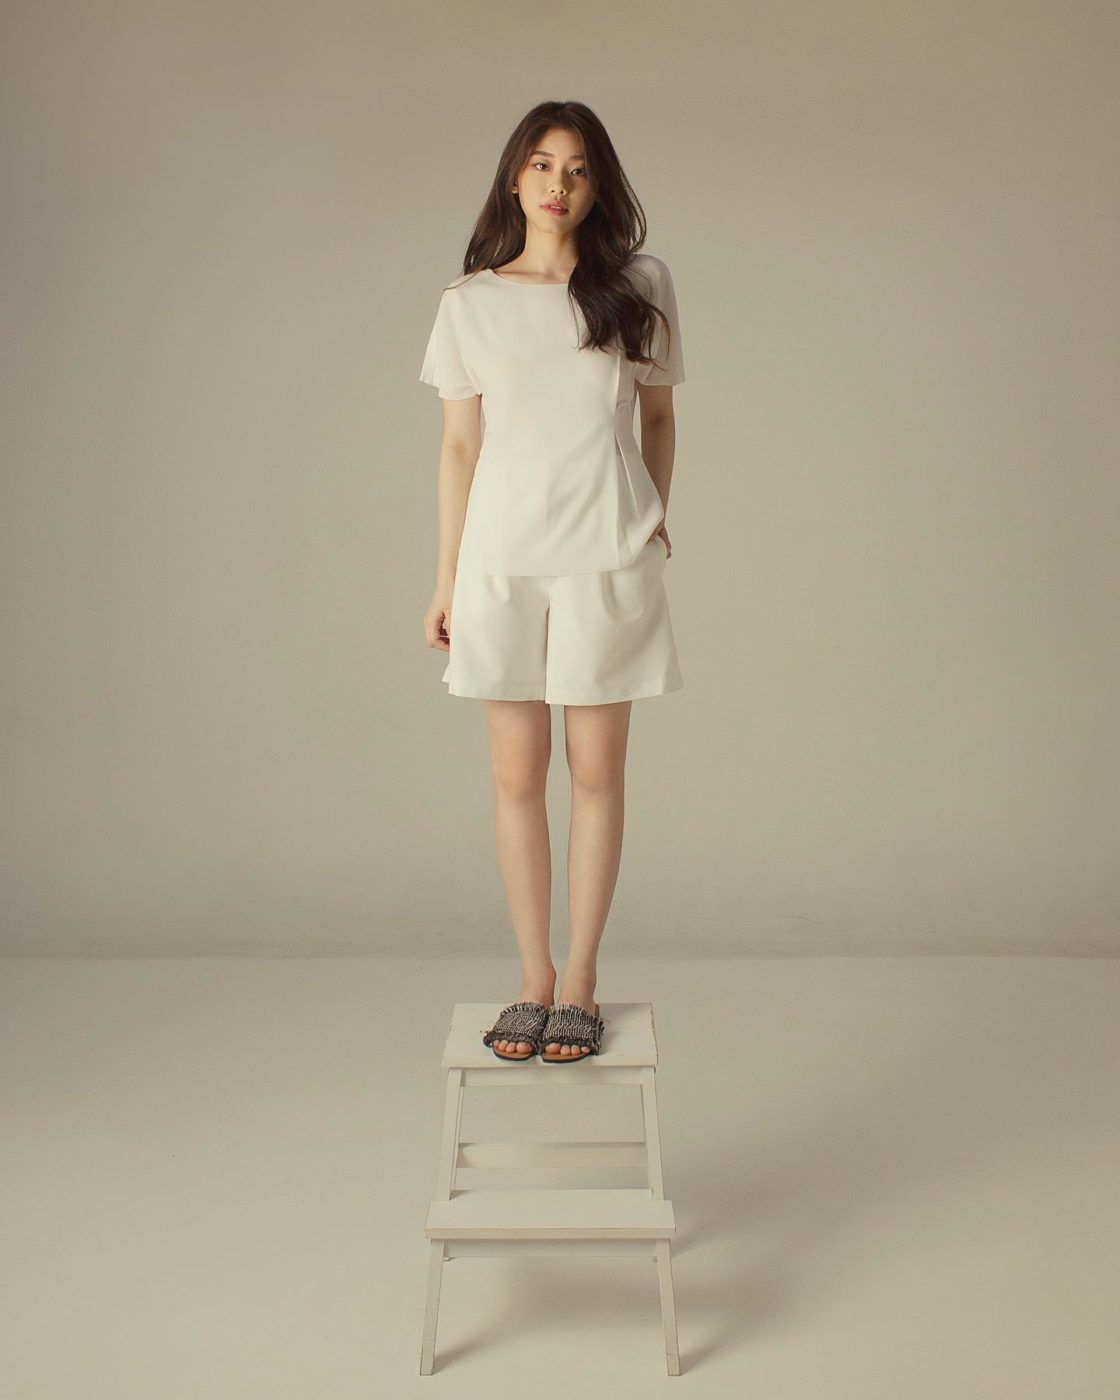 leebyulbyul byul jiaxin basic models female fashion malaysian singapore commercial asian